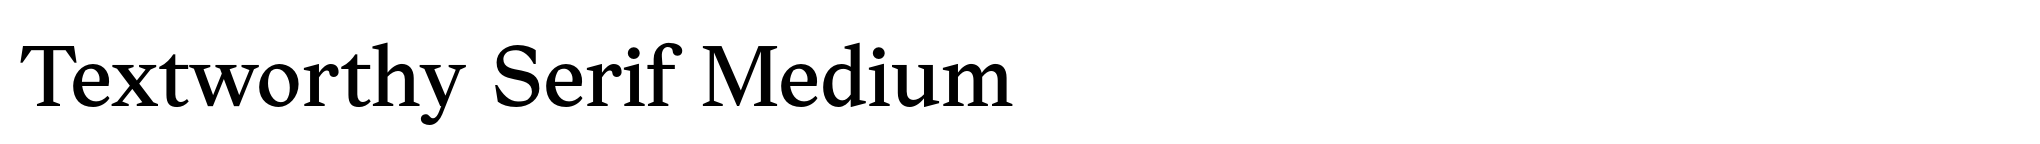 Textworthy Serif Medium image